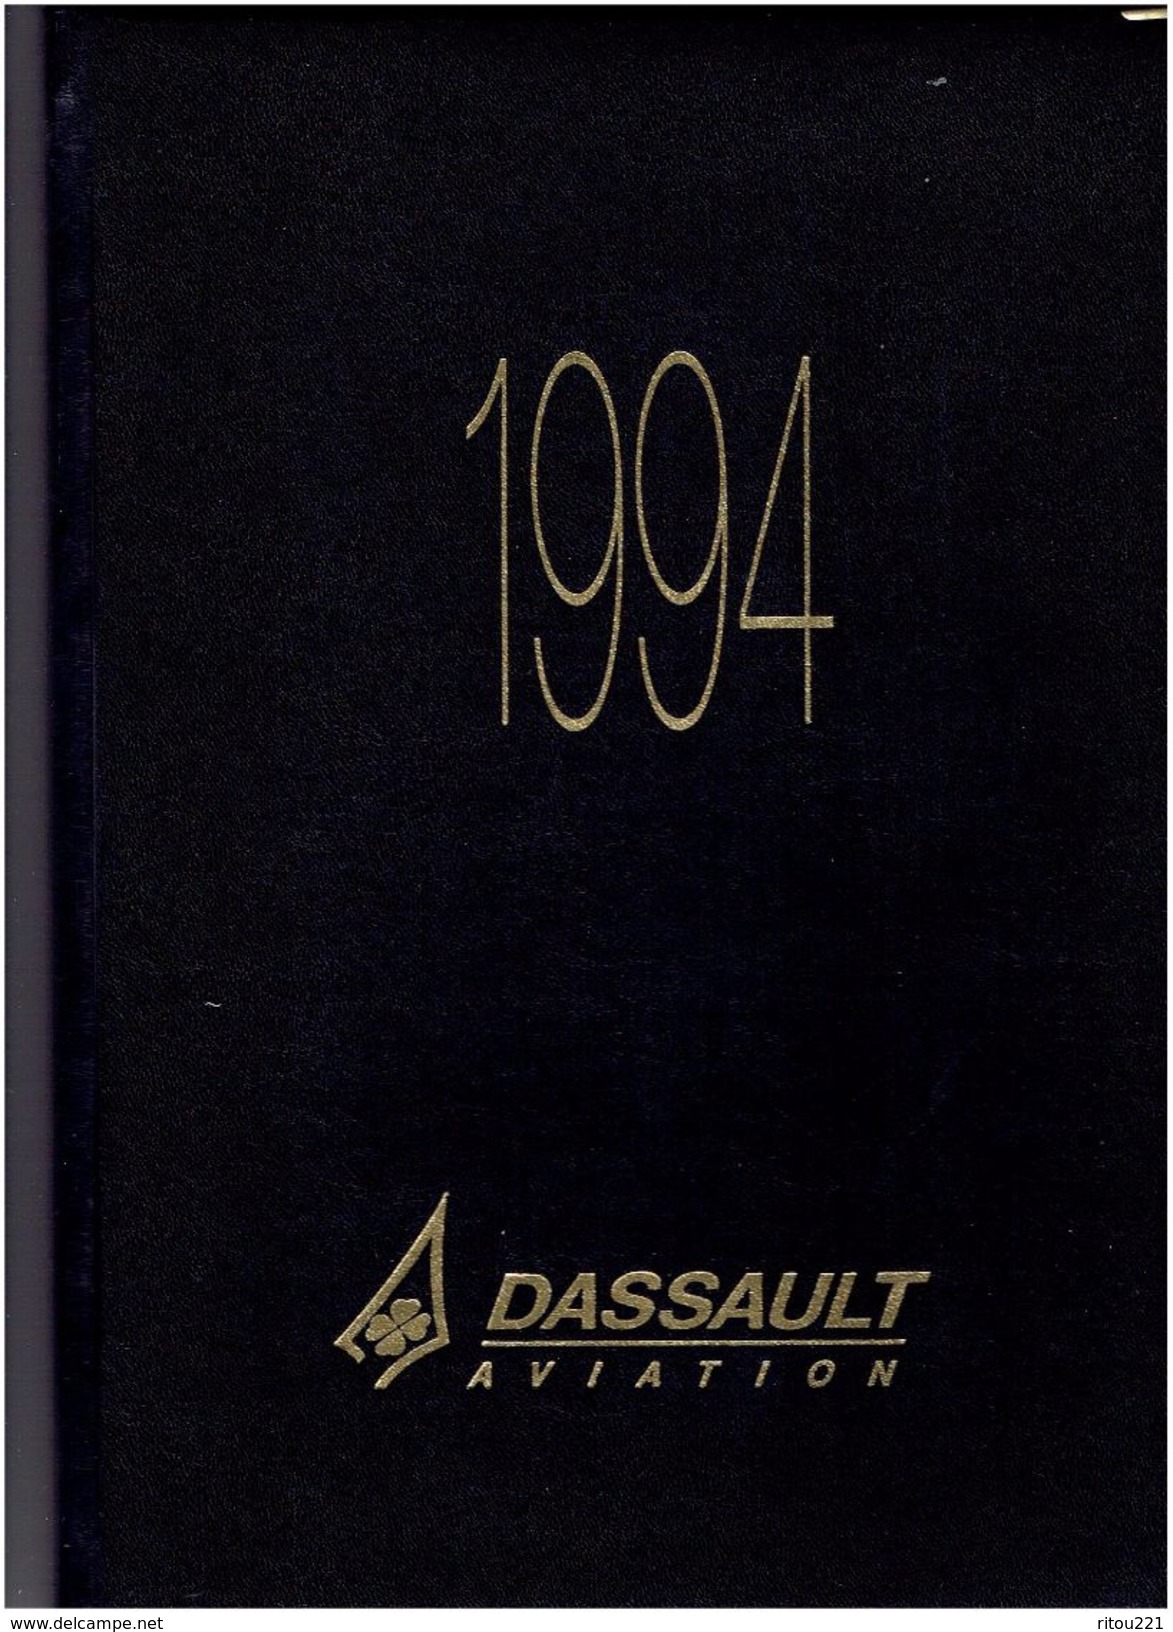 Agenda 1994 - DASSAULT AVIATION - Avion ESPACE VOITURE DE COURSE PEUGEOT 905 Esso HELARY BOUCHUT - Schrijfbenodigdheden